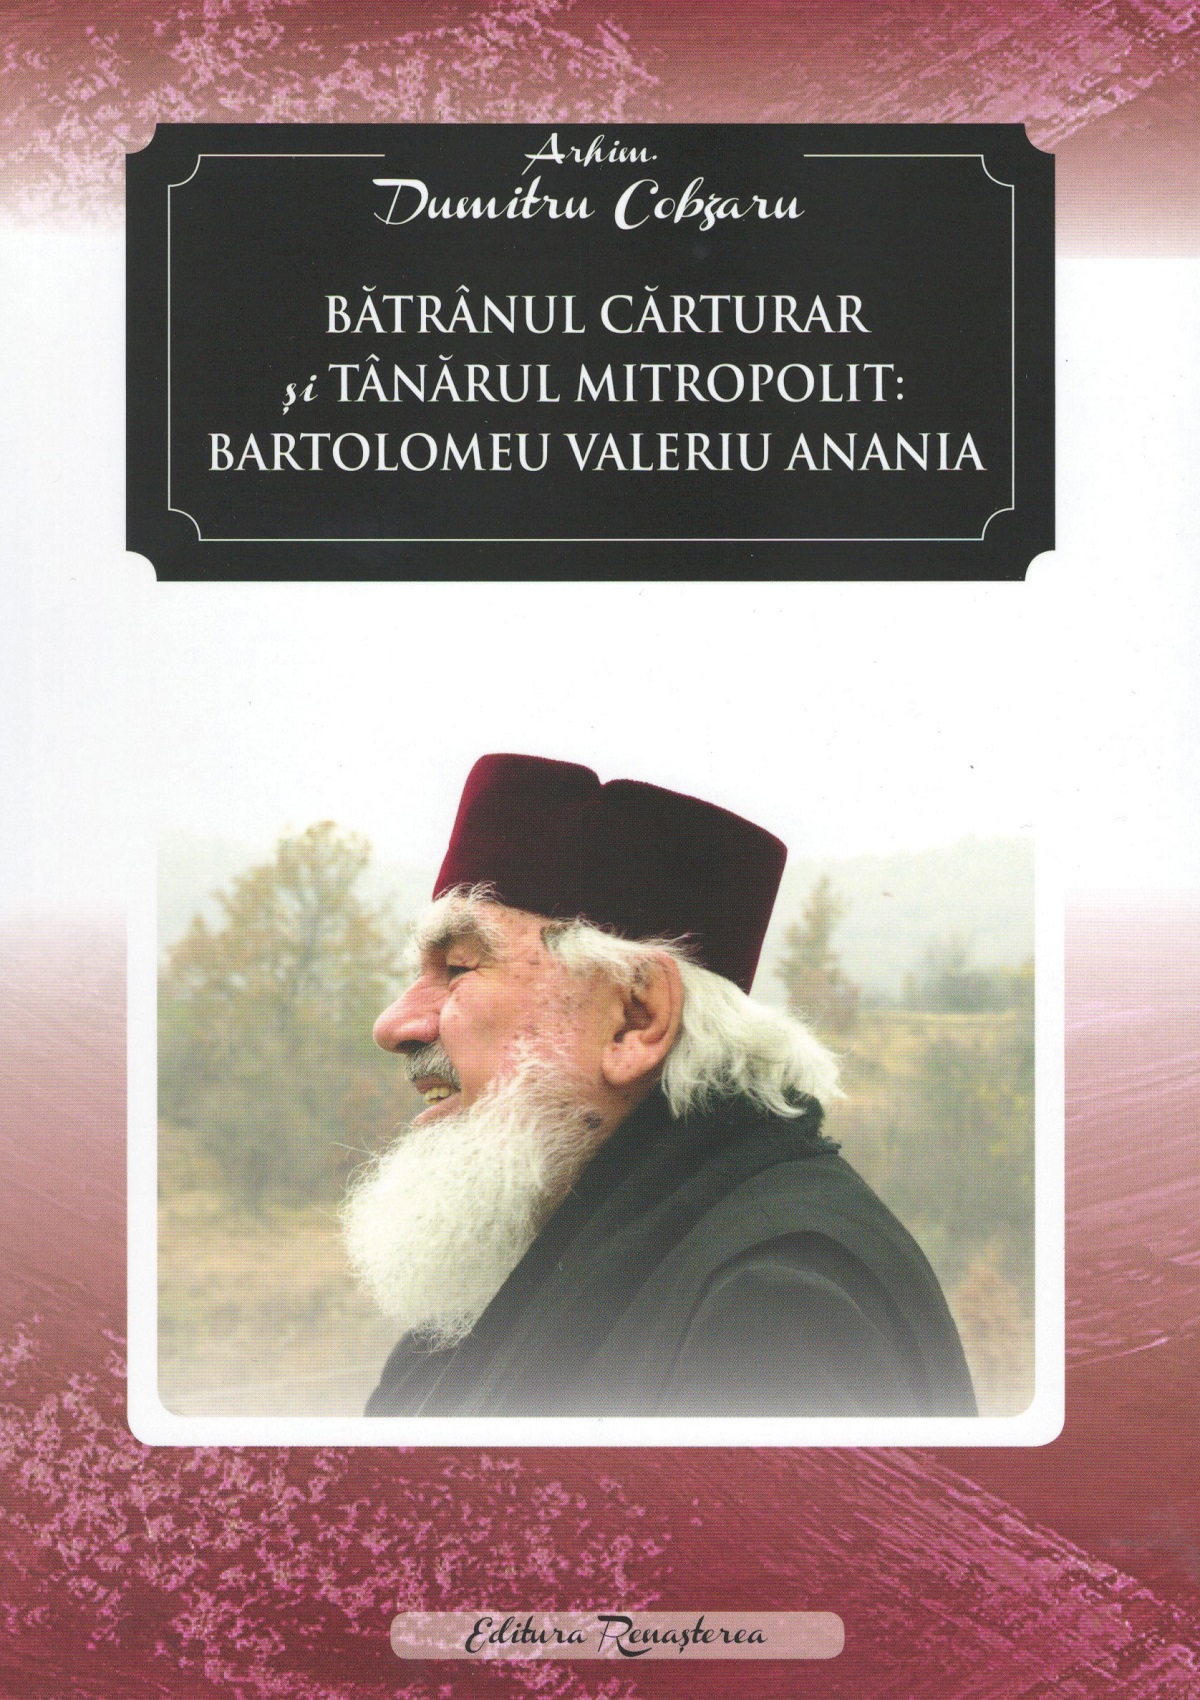 Batranul carturar si tanarul mitropolit: Bartolomeu Valeriu Anania - Arhim. Dumitru Cobzaru